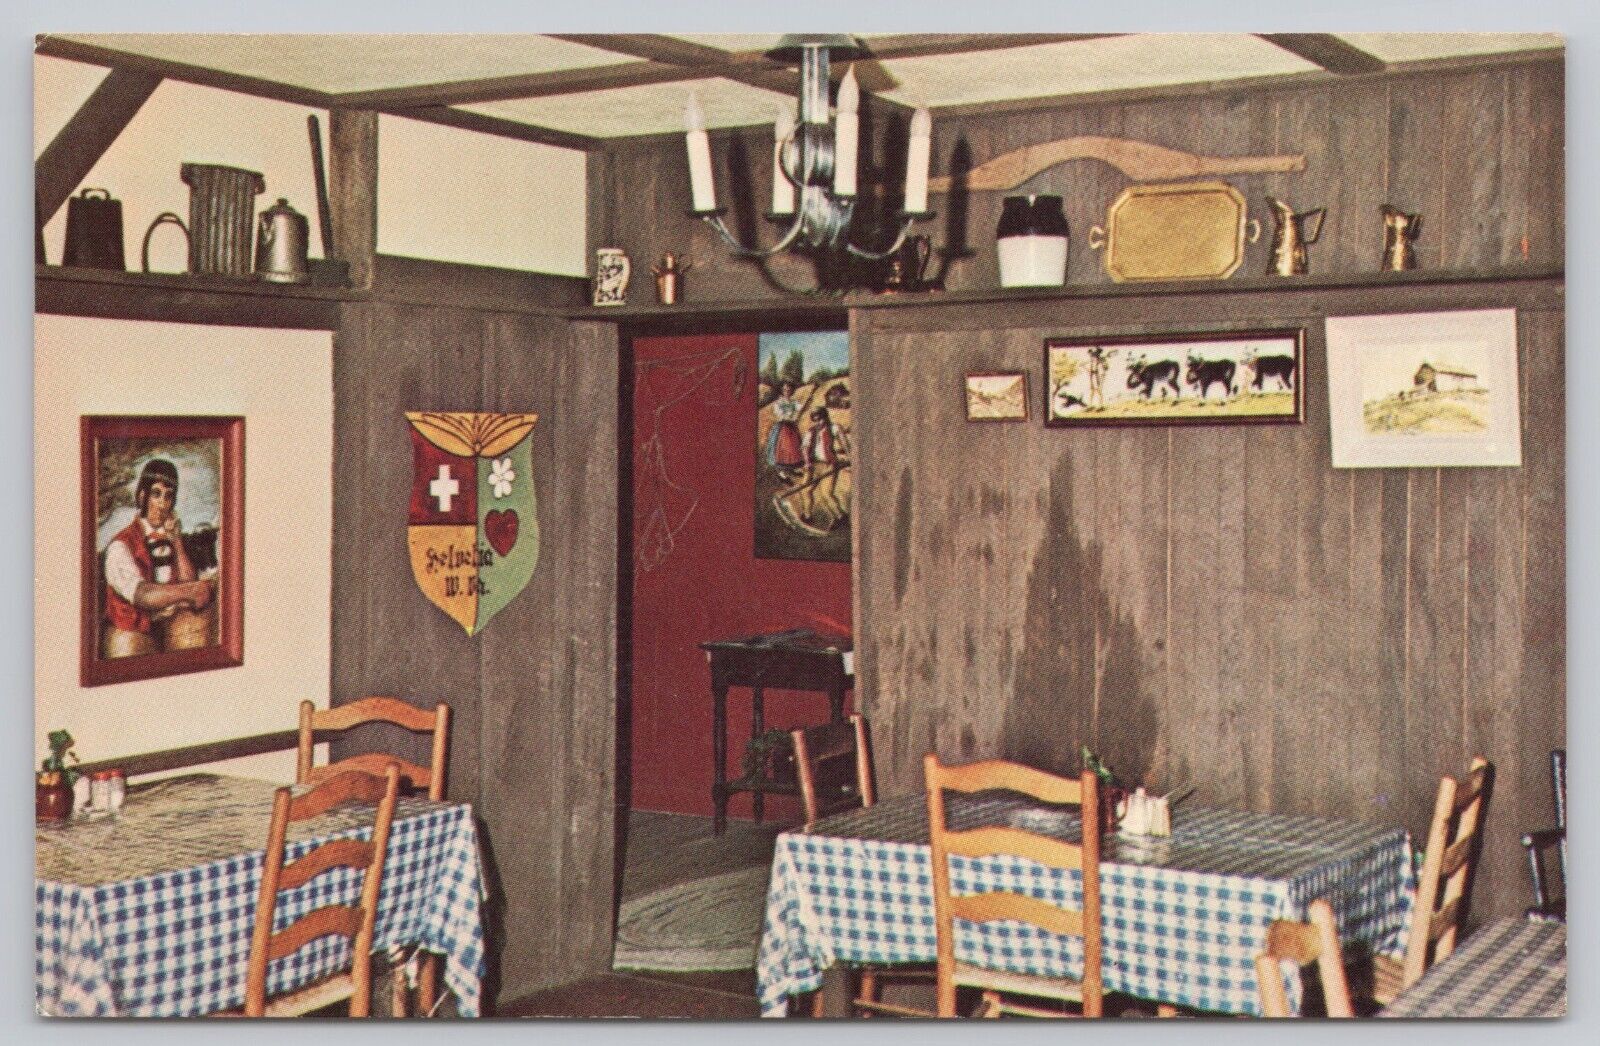 Helvetia West Virginia, The Hutte Swiss Restaurant Dining Room, Vintage Postcard